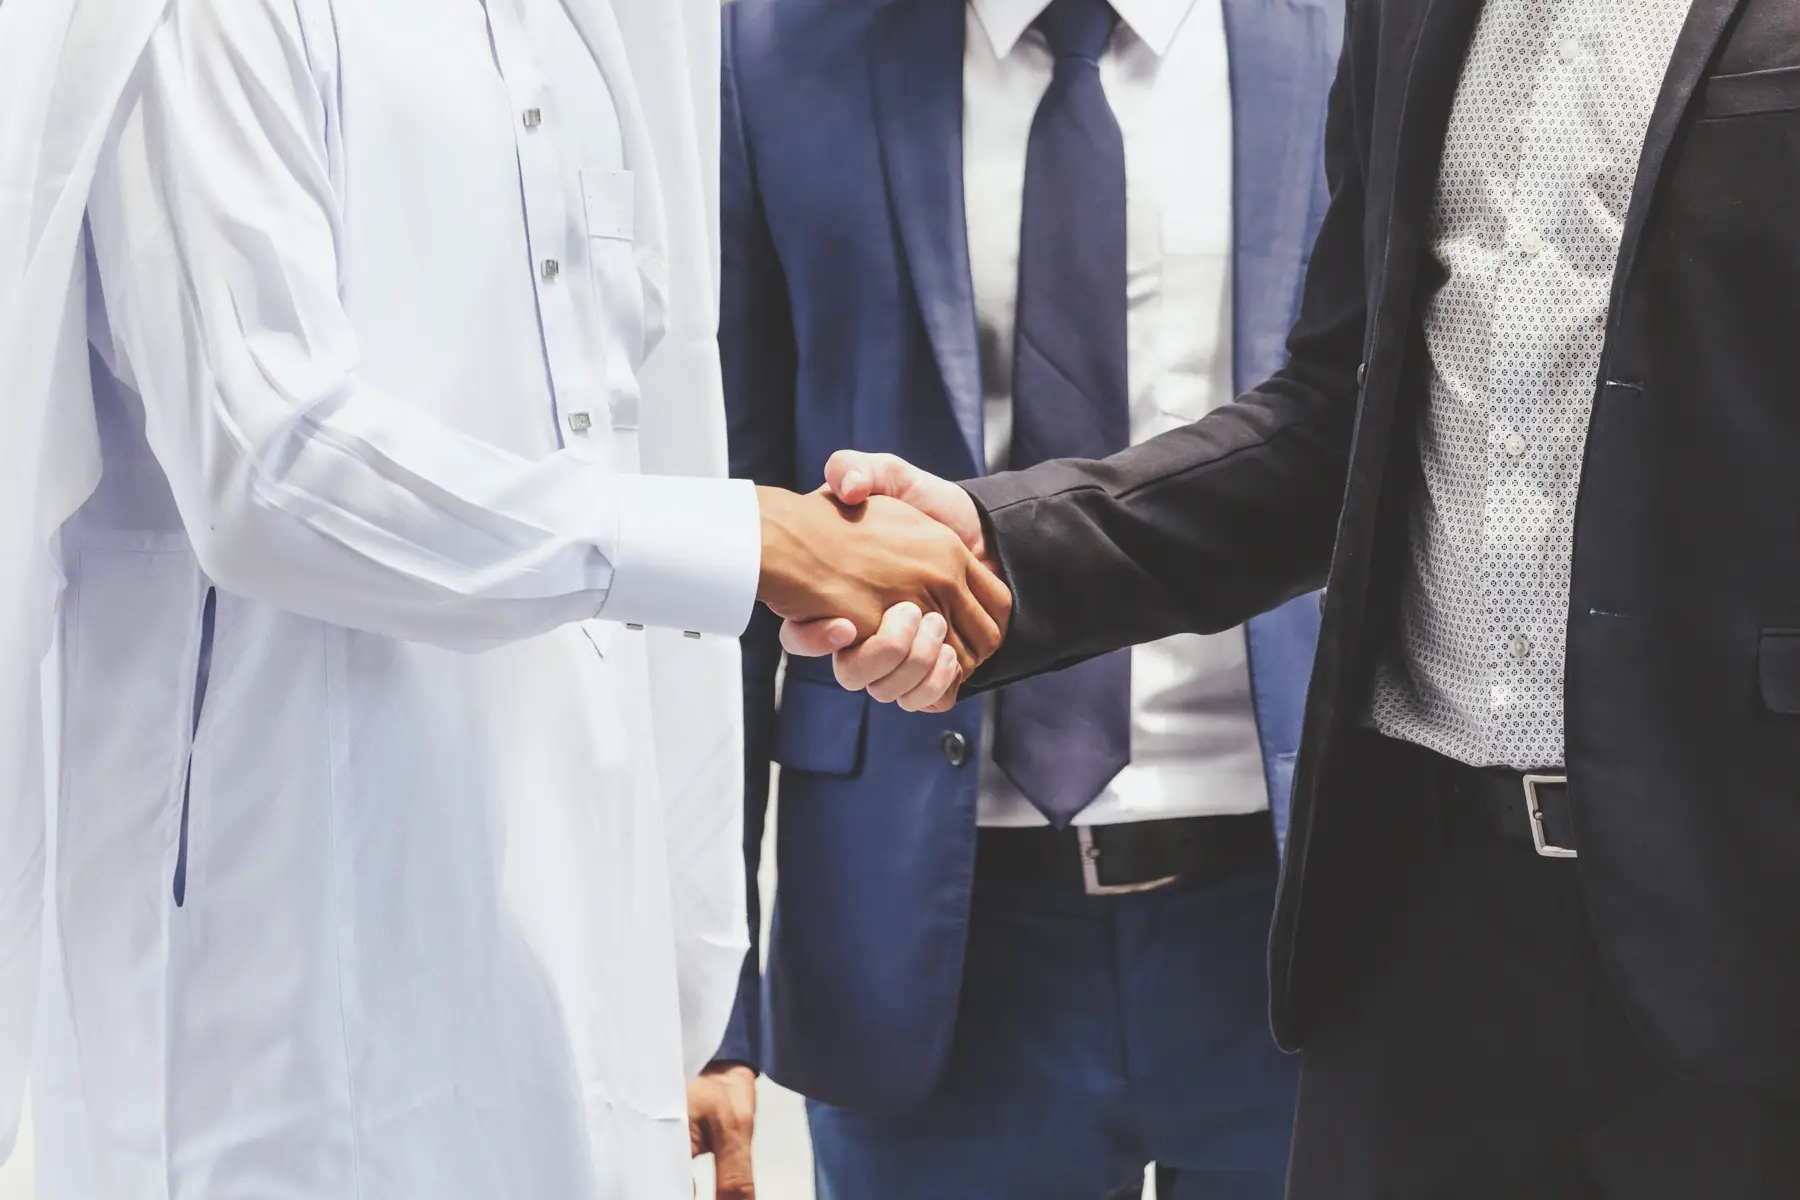 Handshake with an Emirati businessman